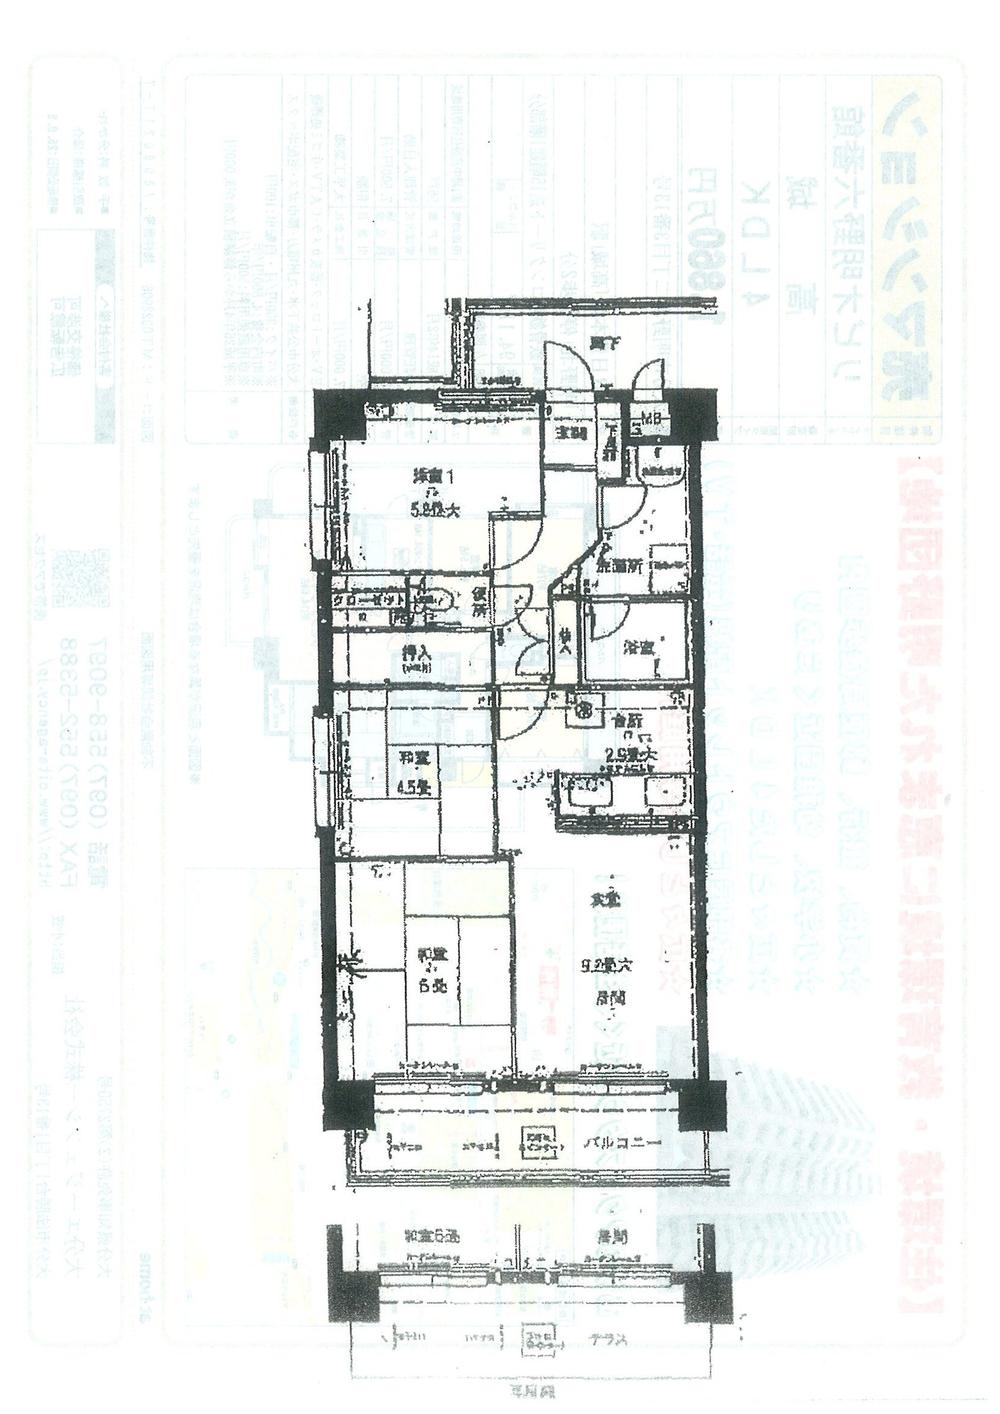 Floor plan. 3LDK, Price 8.9 million yen, Occupied area 65.26 sq m , Balcony area 9 sq m current state priority